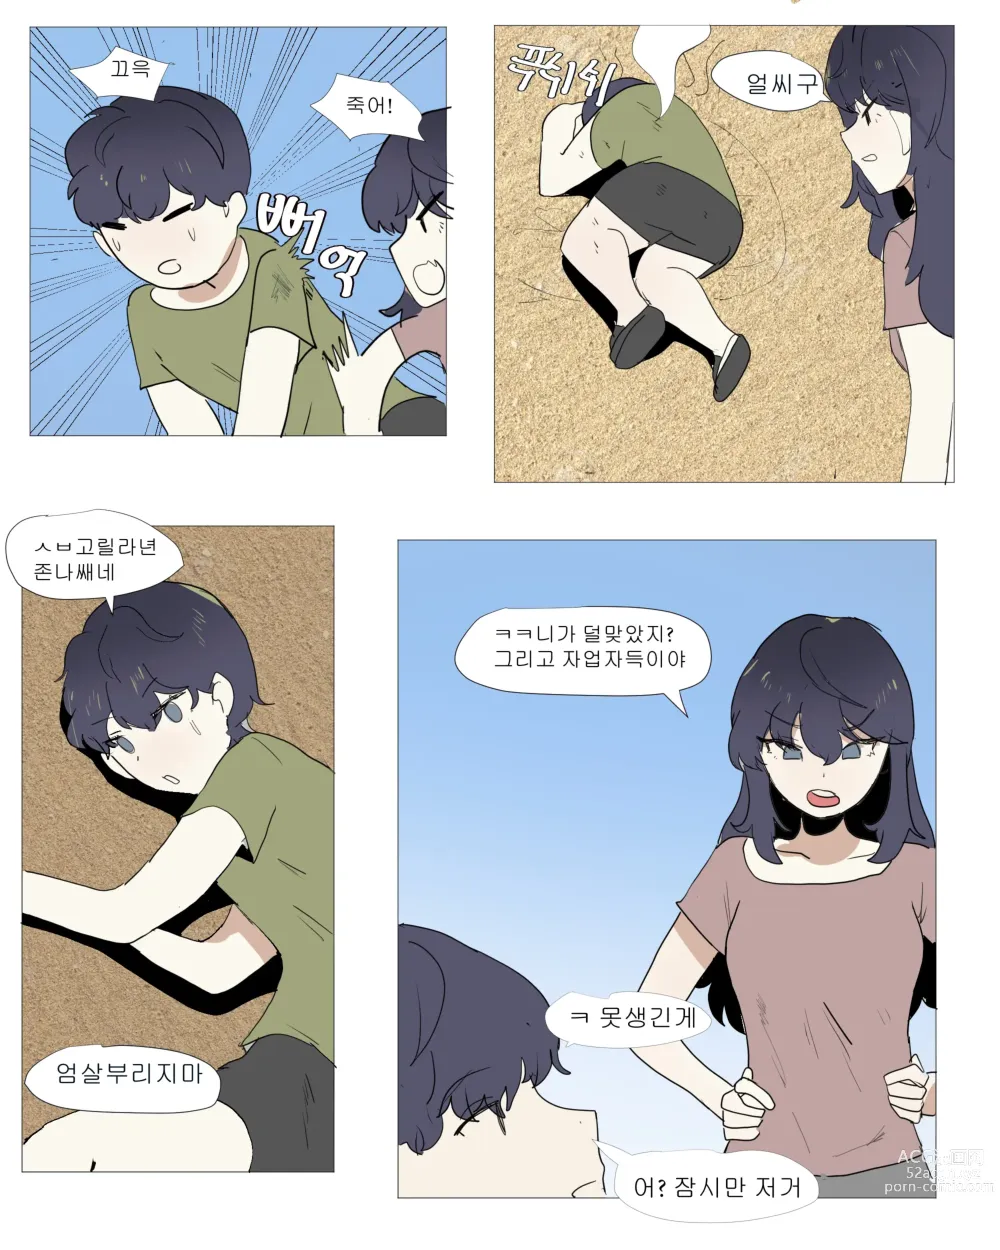 Page 3 of doujinshi 여동생이랑 근친하는 만화 5